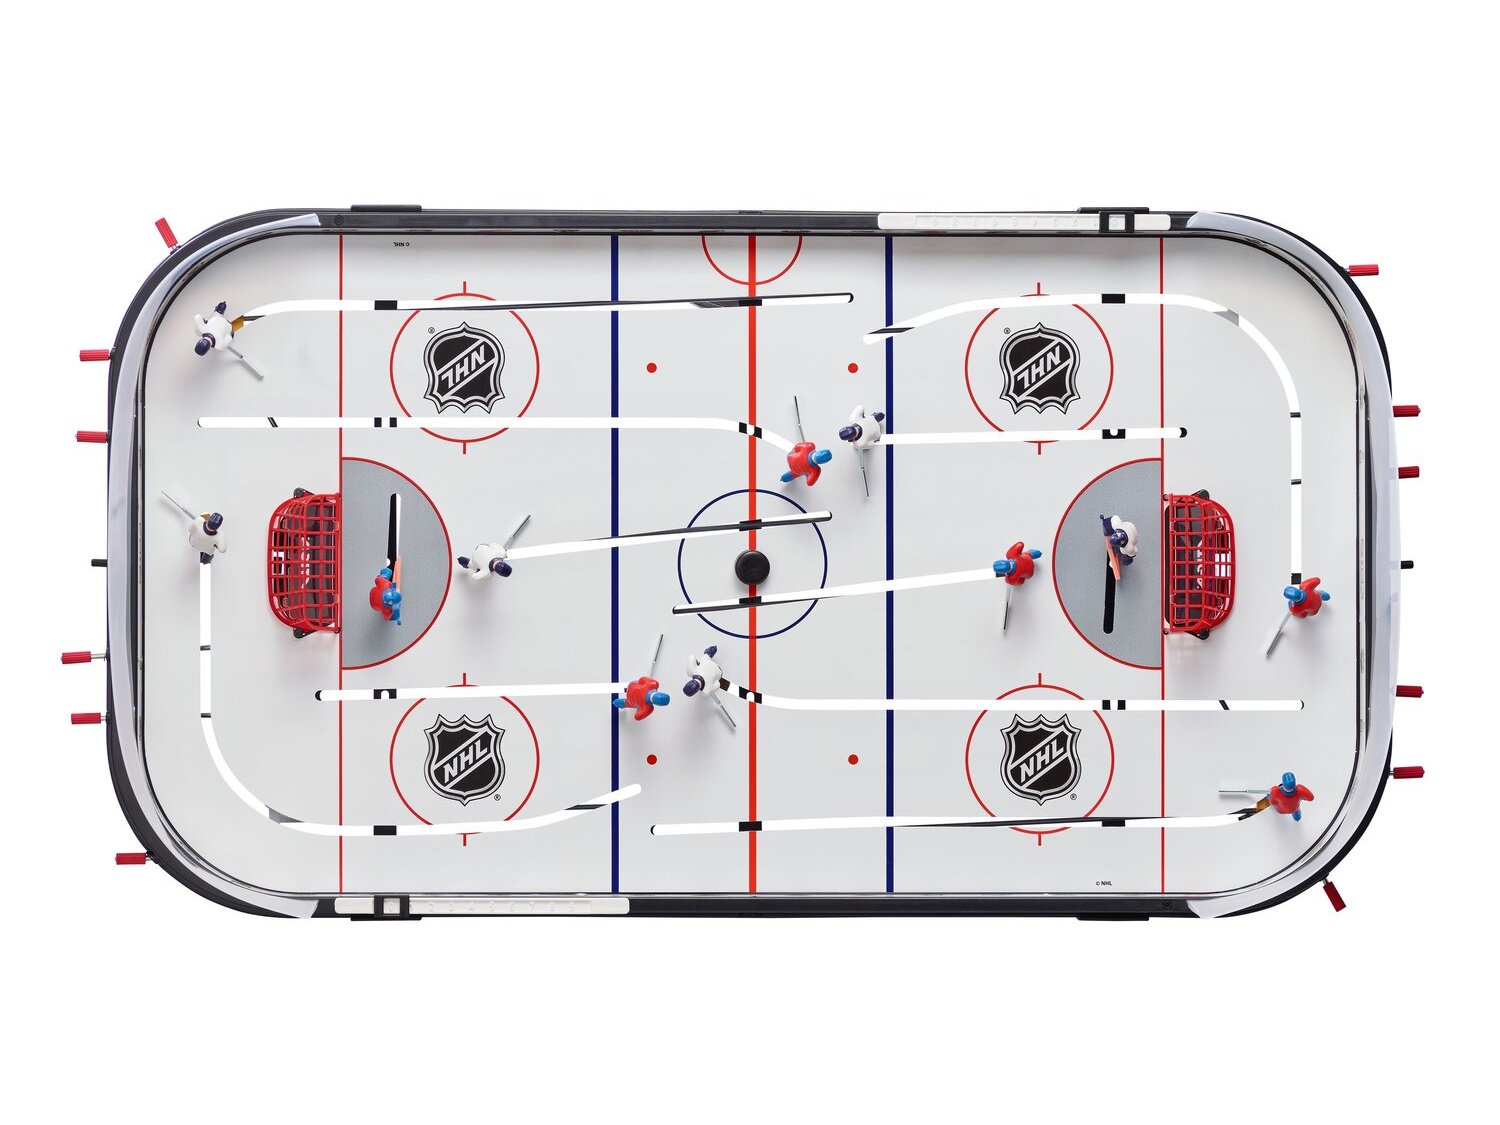 STIGA Table Top Rod Hockey Game FREE MARBLE PUCK BONUS, 3T Stanley Cup  model